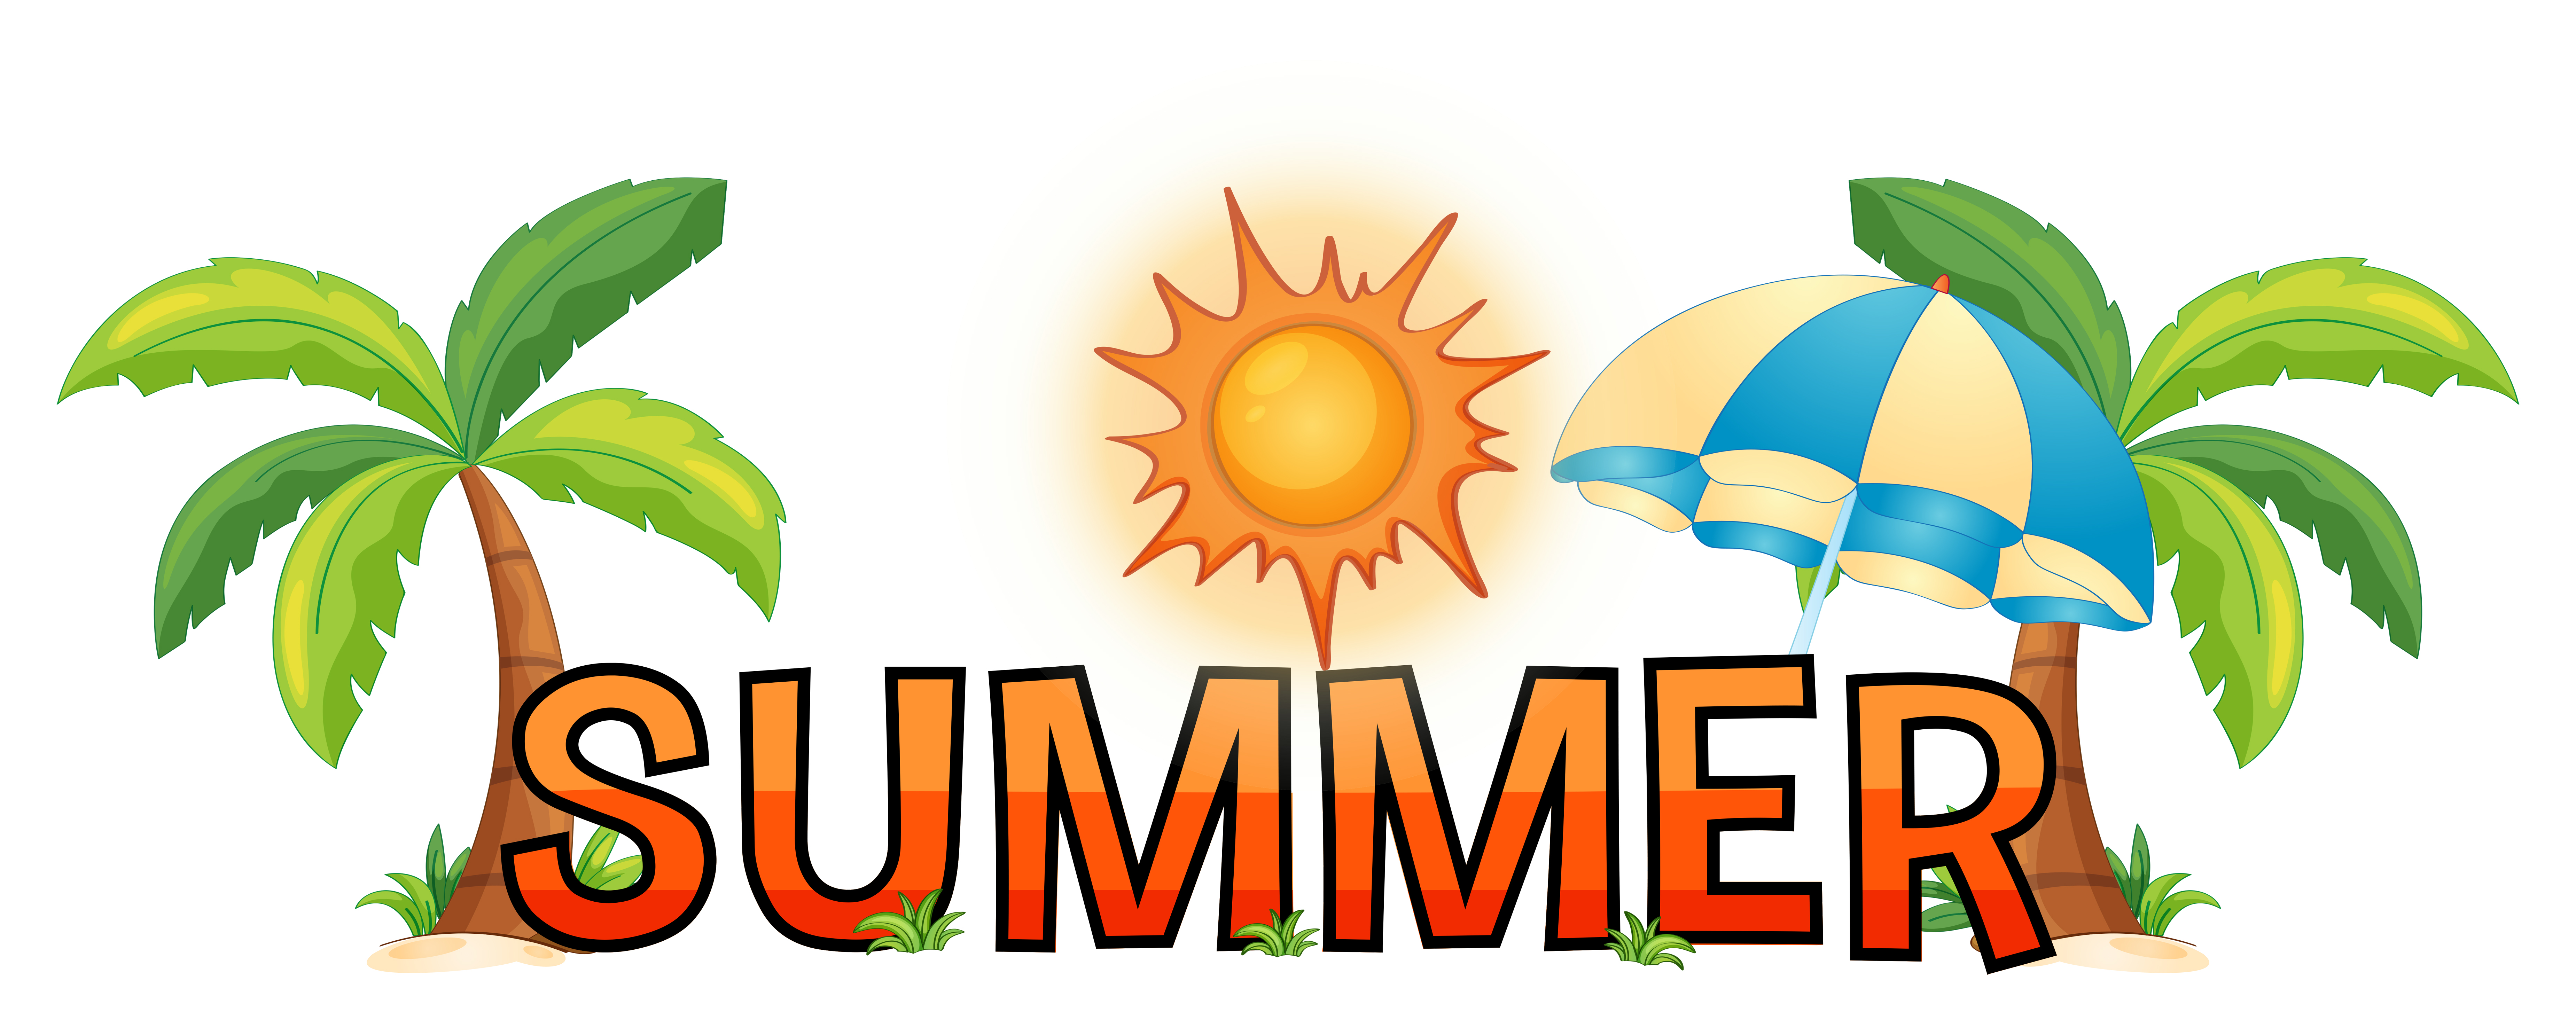 Font design for word summer - Download Free Vectors ...